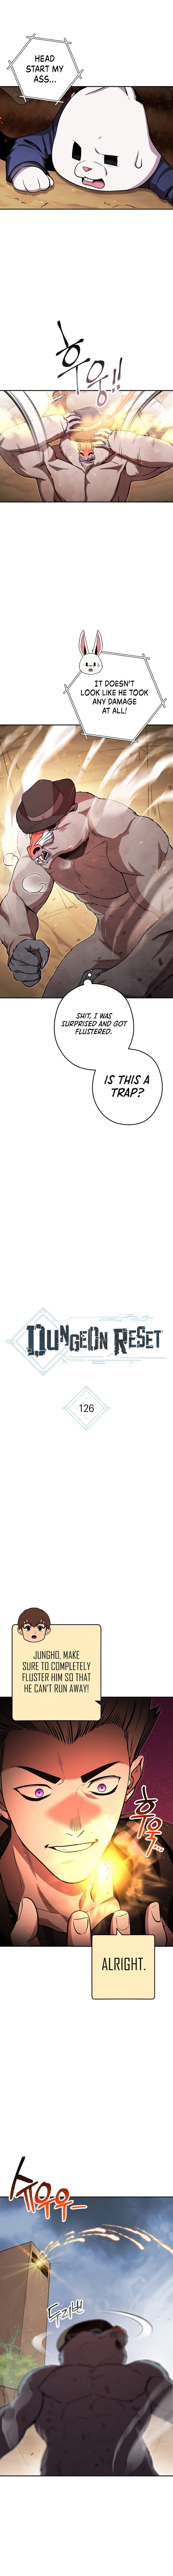 dungeon-reset-chap-126-2